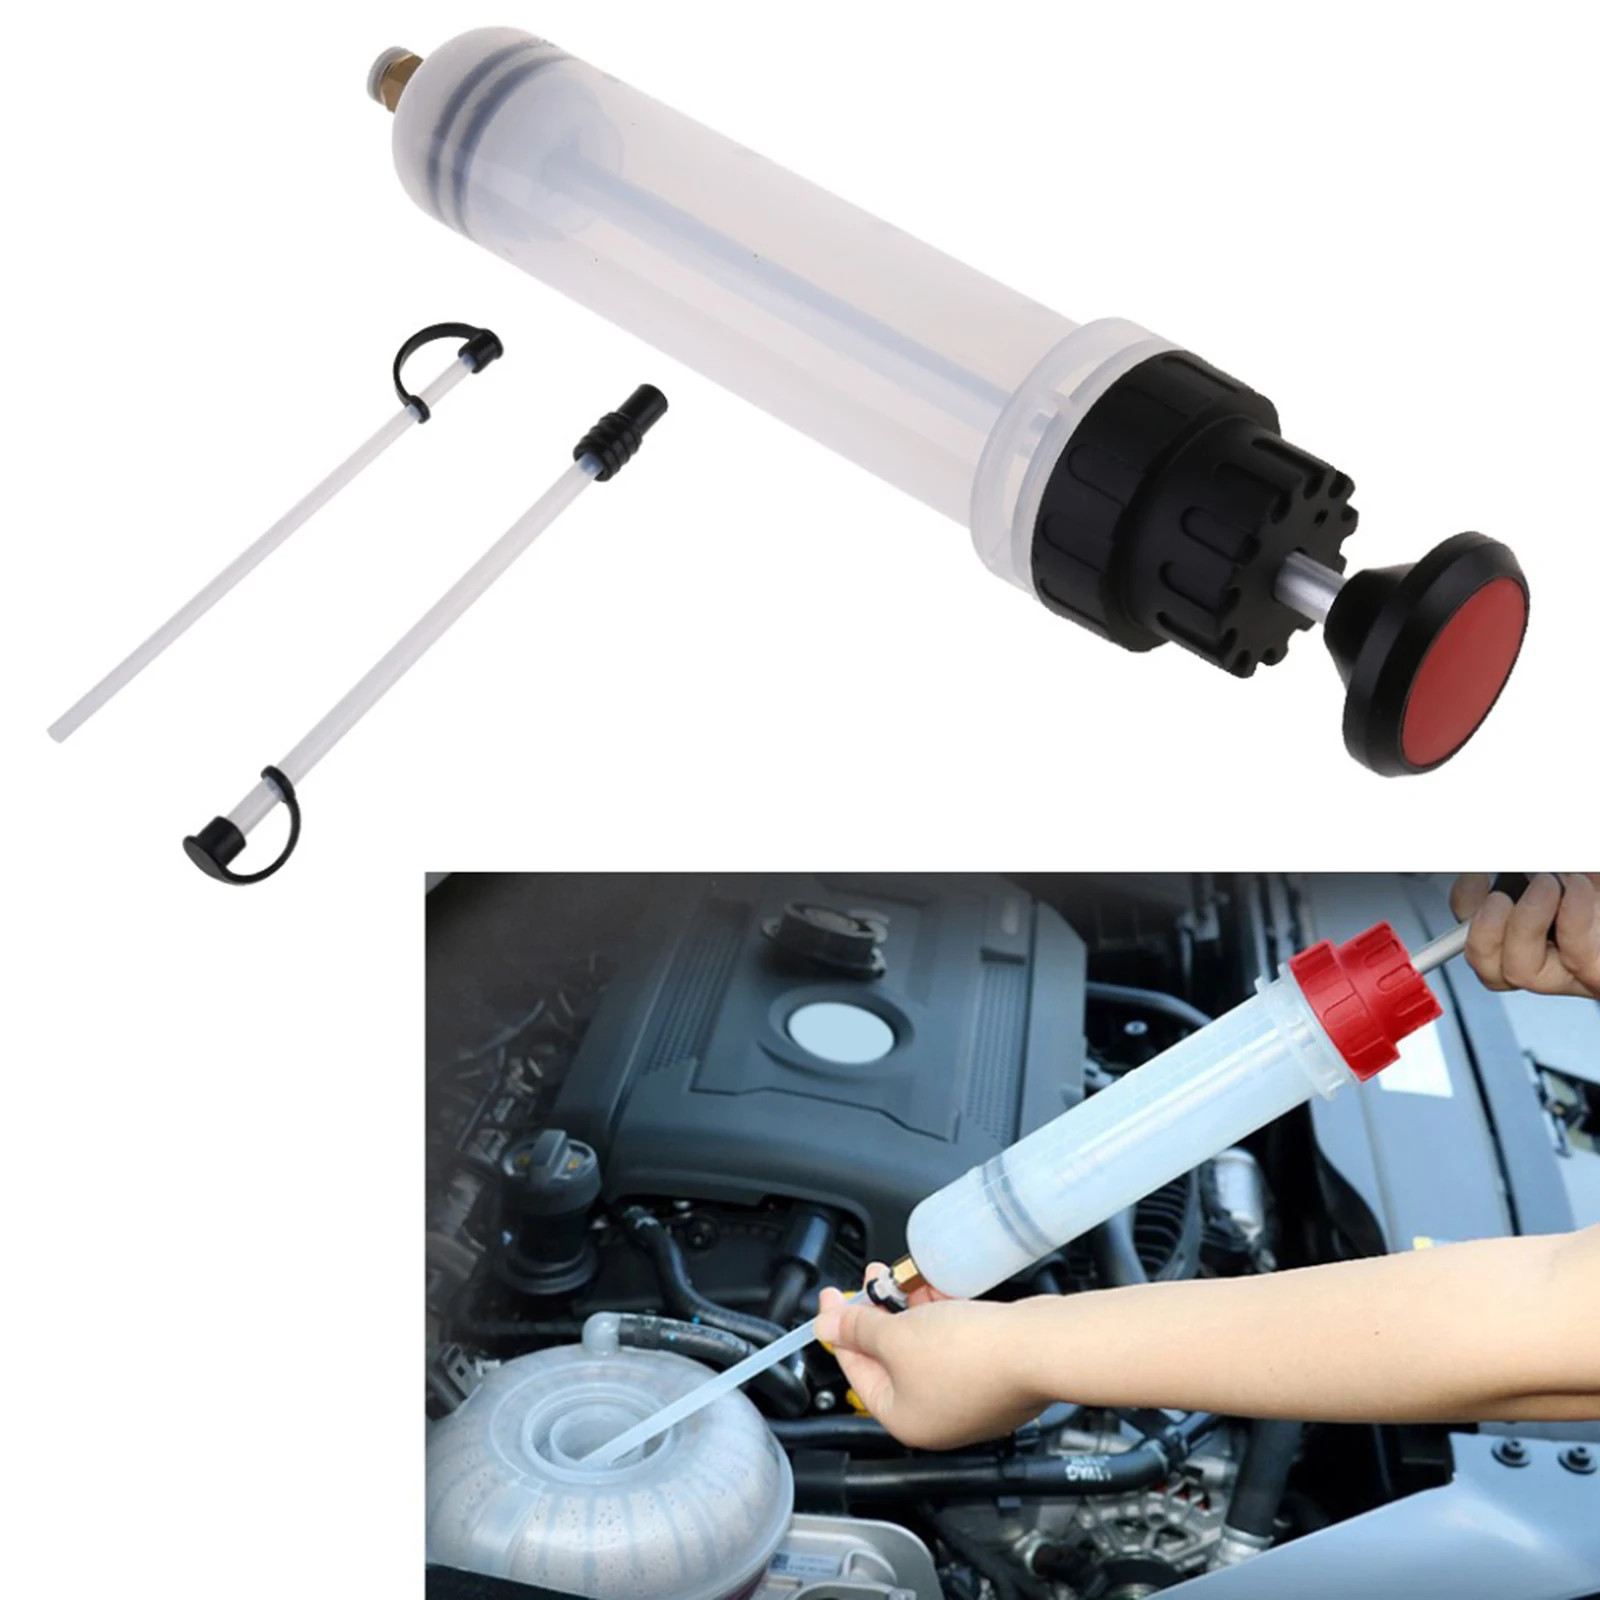 200ML Oil Fluid Extractor Filling Syringe Hand Pump Tool for ATV`s, Boats, Farm Equipment,Oil Change Evacuation Pump